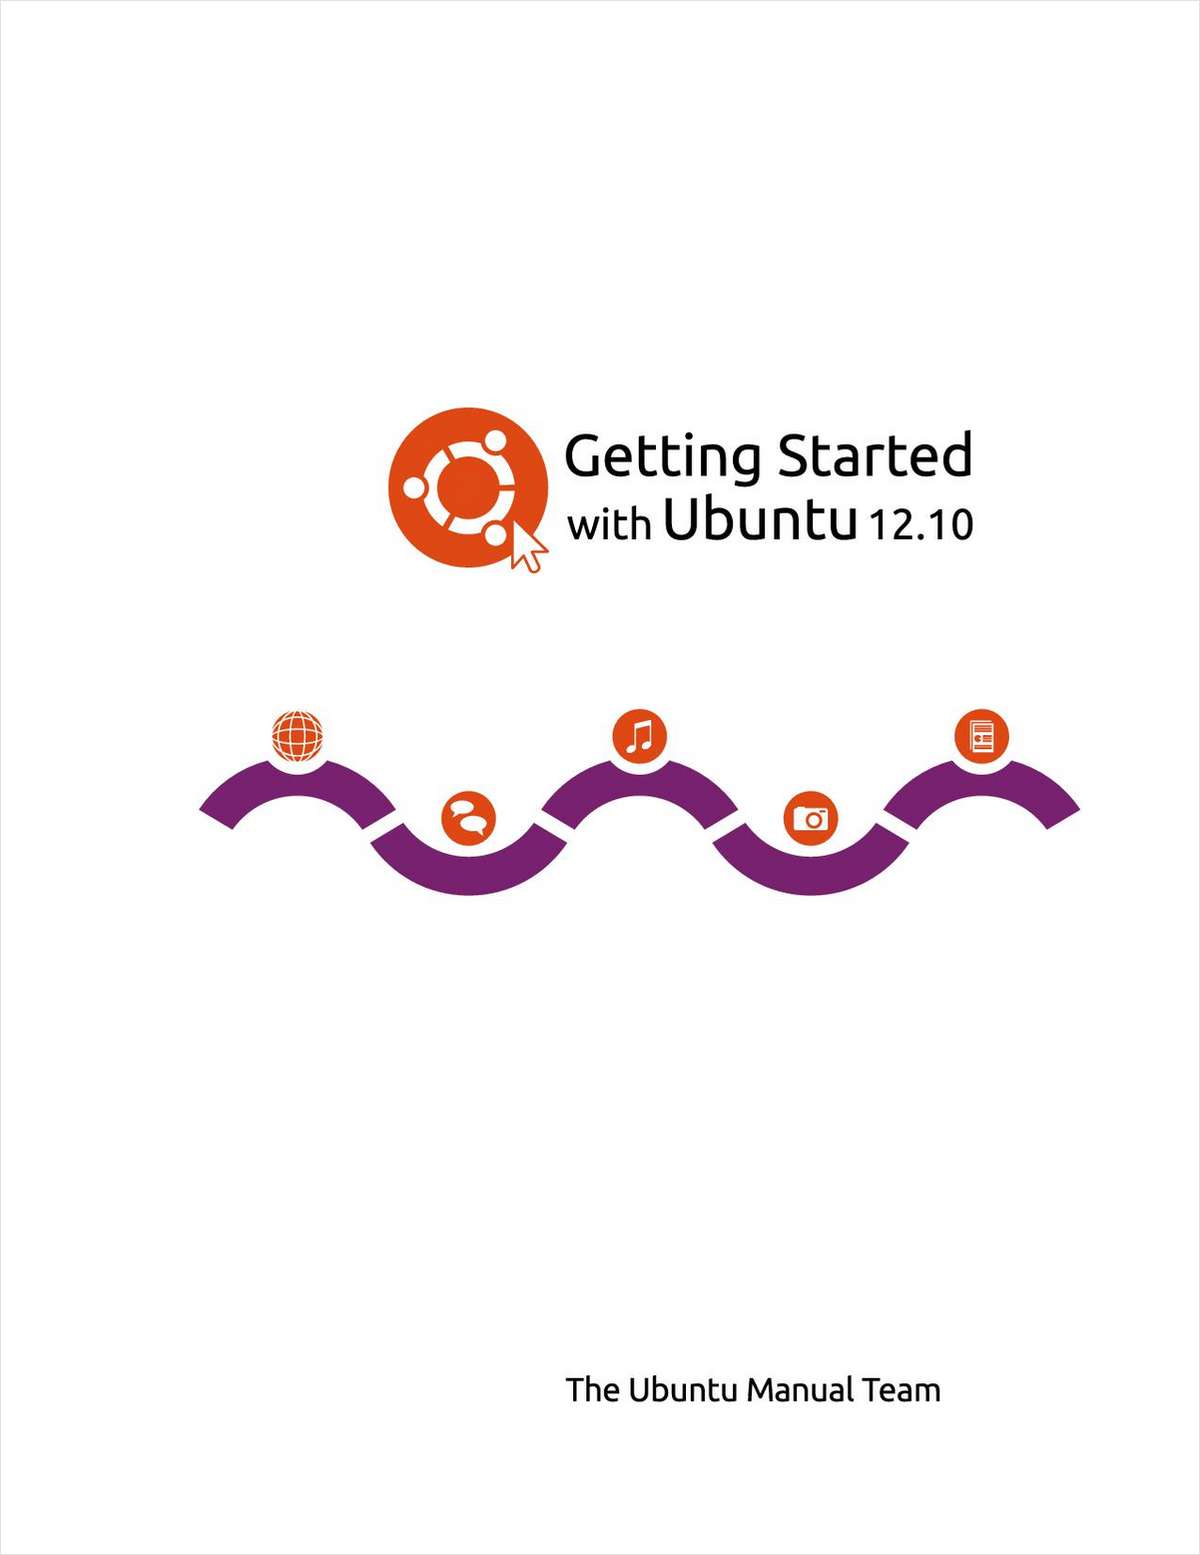 Ubuntu Manual - Getting Started with Ubuntu 16.04